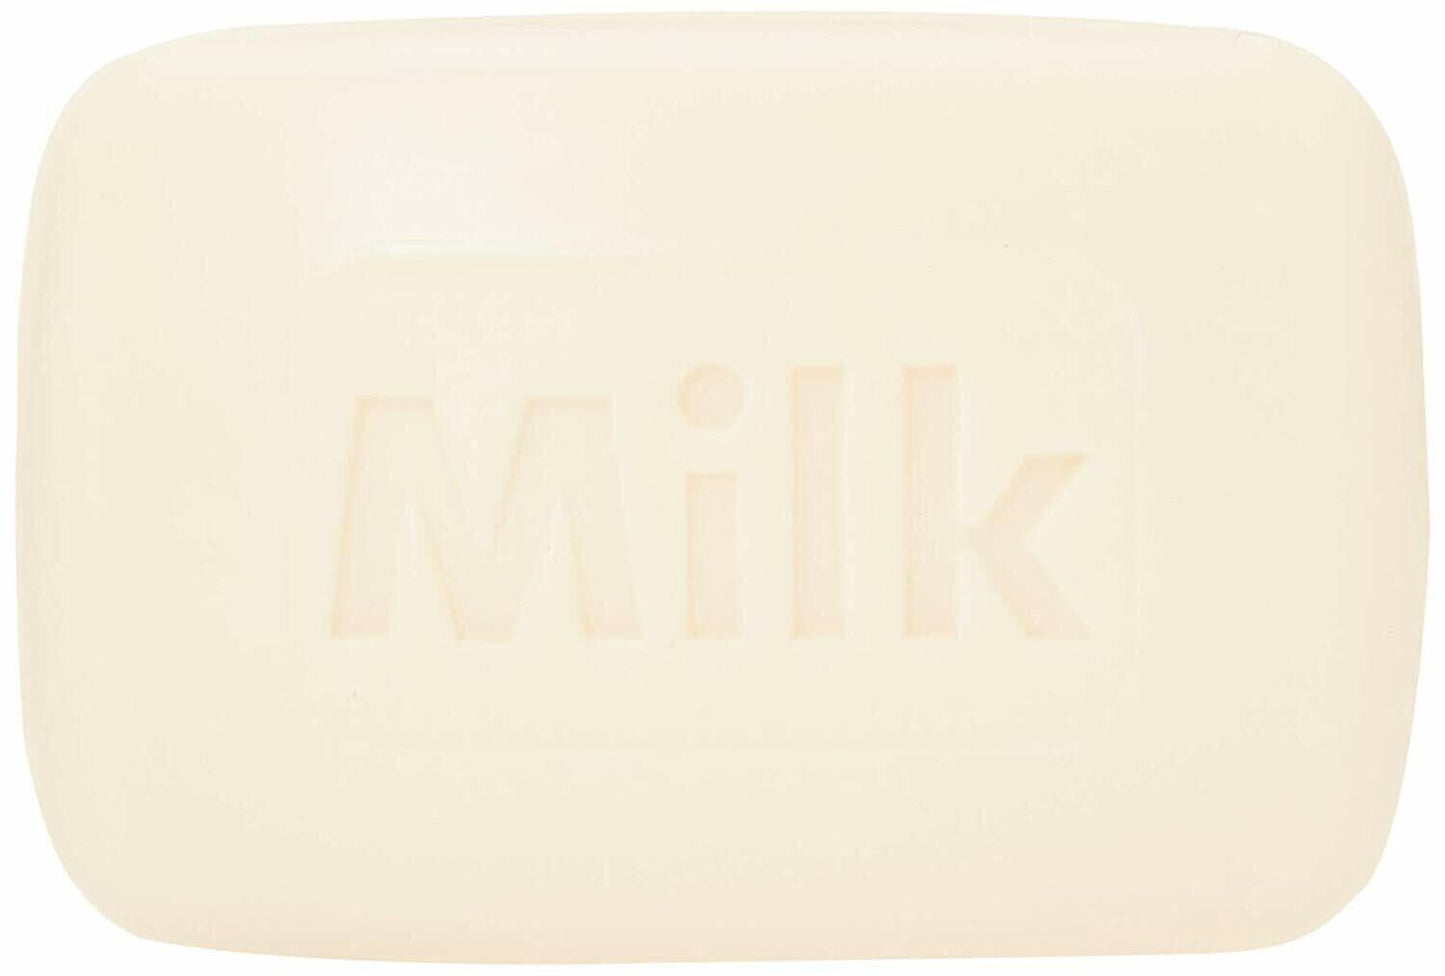 Grisi Donkey's Milk Soap Moisturizng Bar 3.5 Oz Leche de Burra